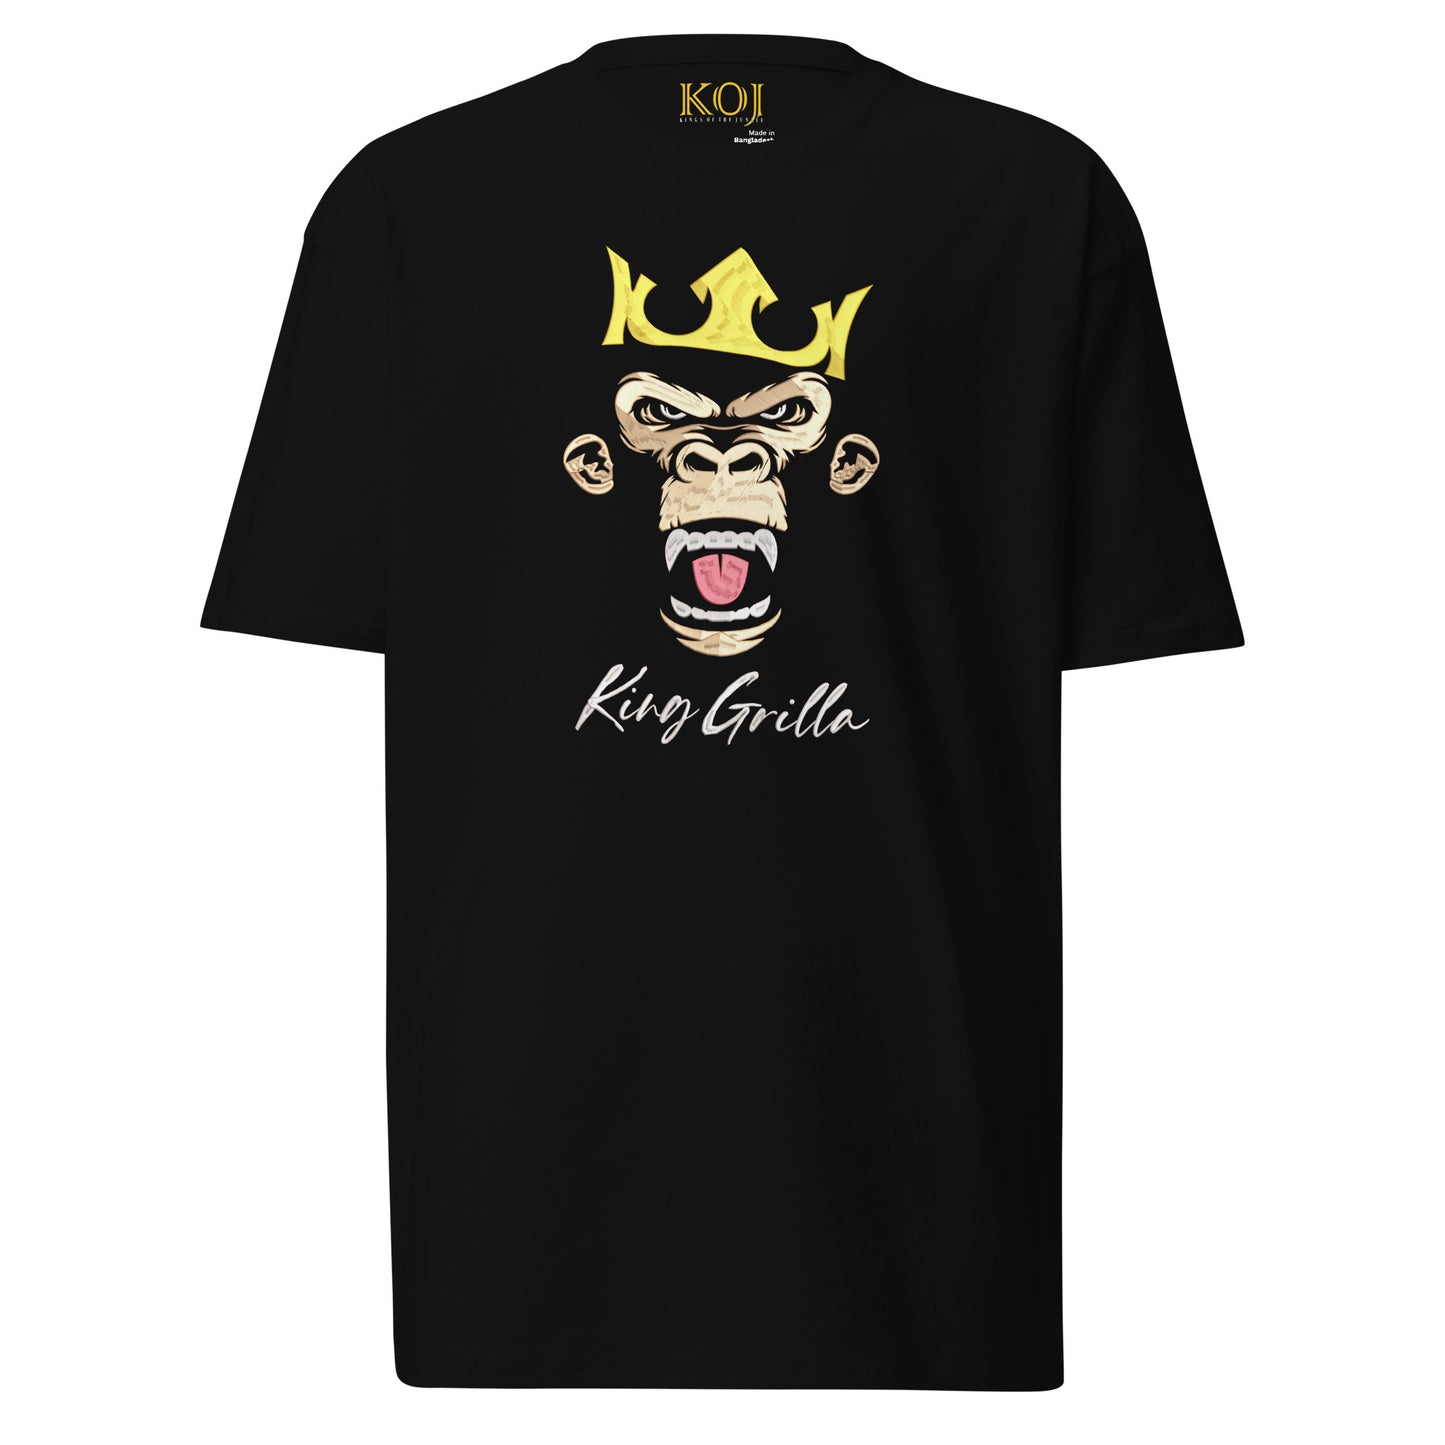 King Grilla- King of the Jungle Premium T-shirt